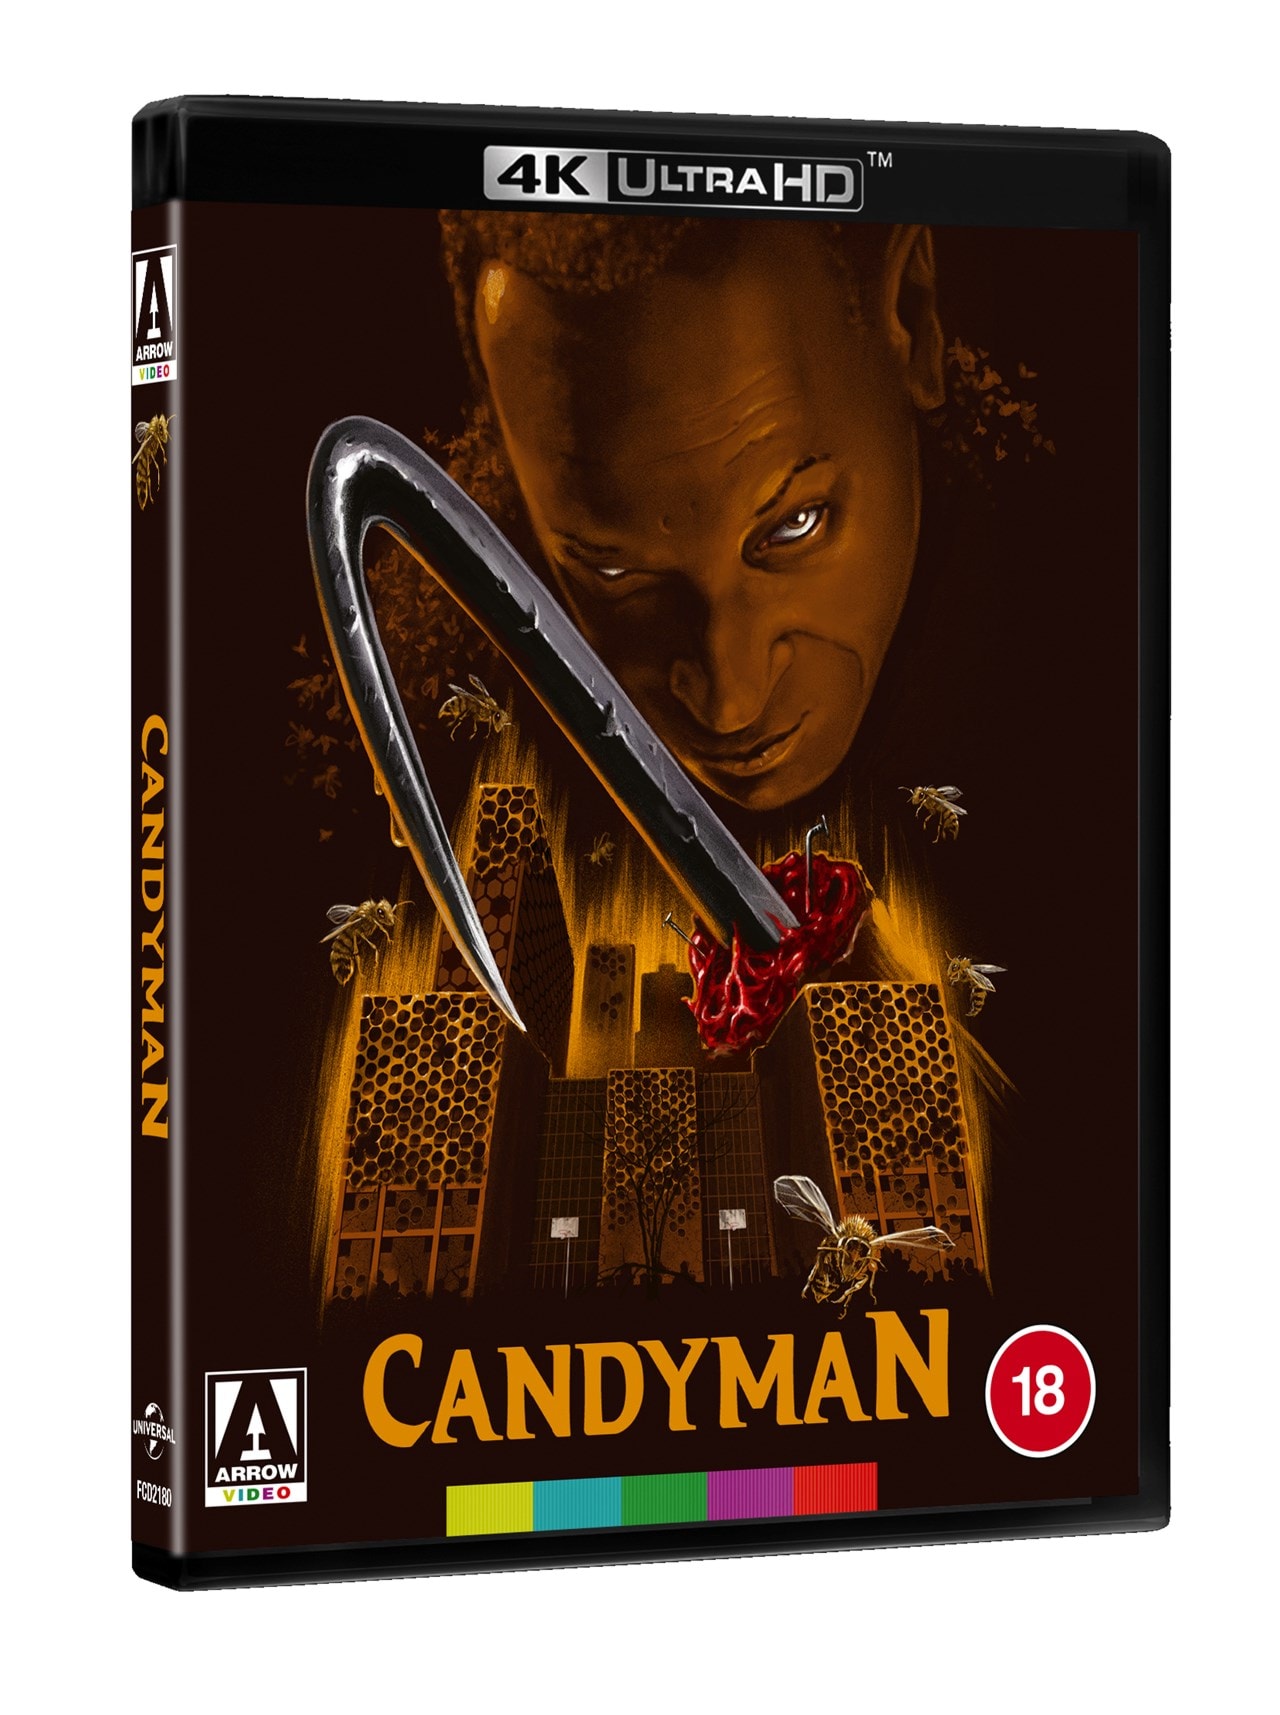 Candyman 4k Ultra Hd Blu Ray Free Shipping Over £20 Hmv Store